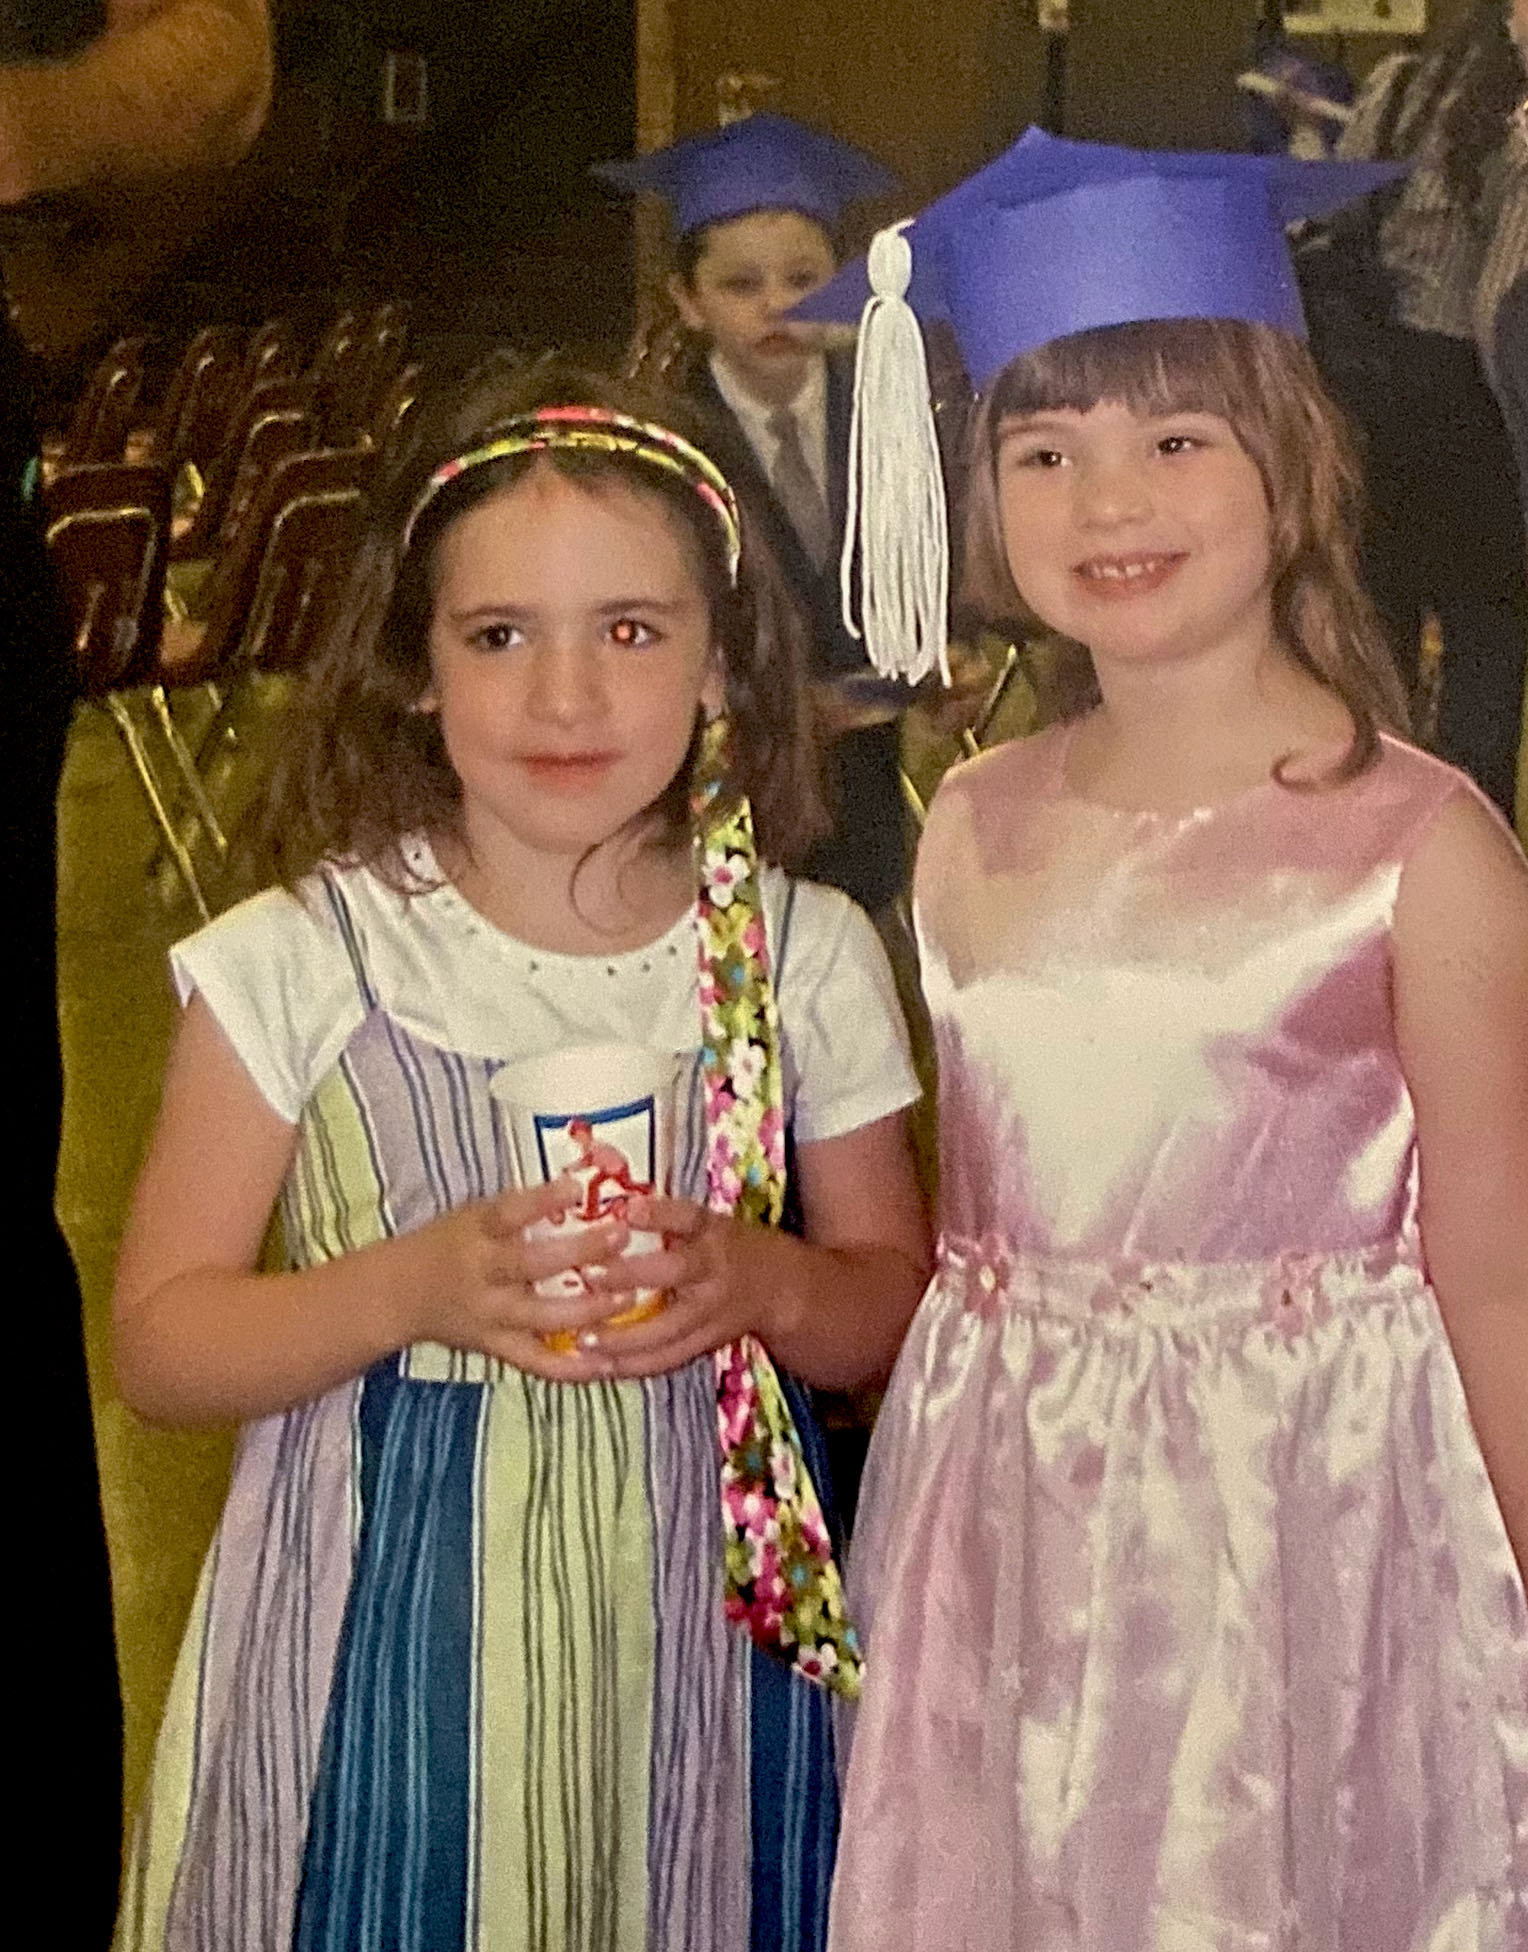 Rachel and Lauren at a childhood graduation ceremony